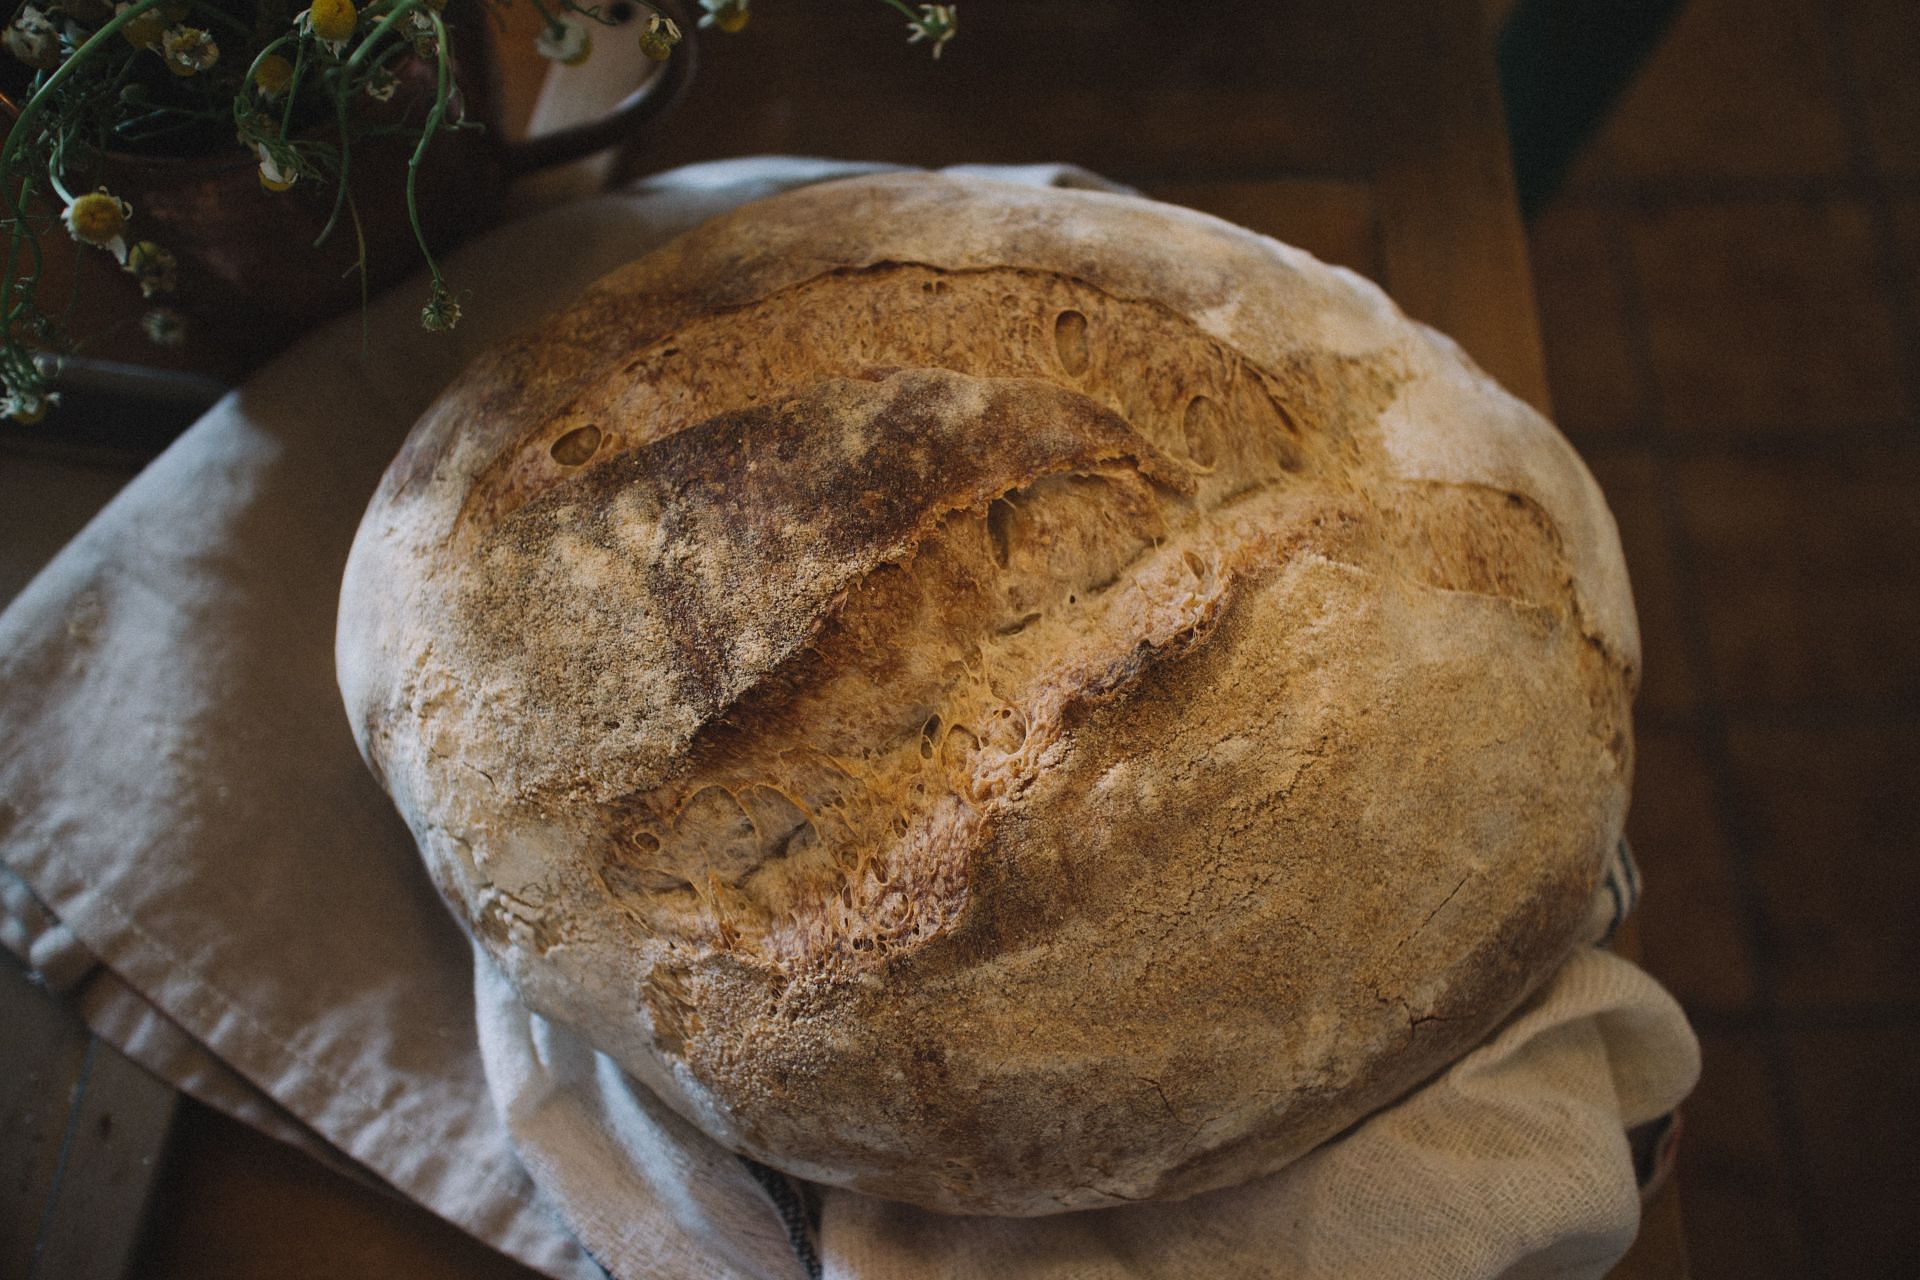 This bread is rich in antioxidants. (Image via Pexels/Monserrat Soldu)